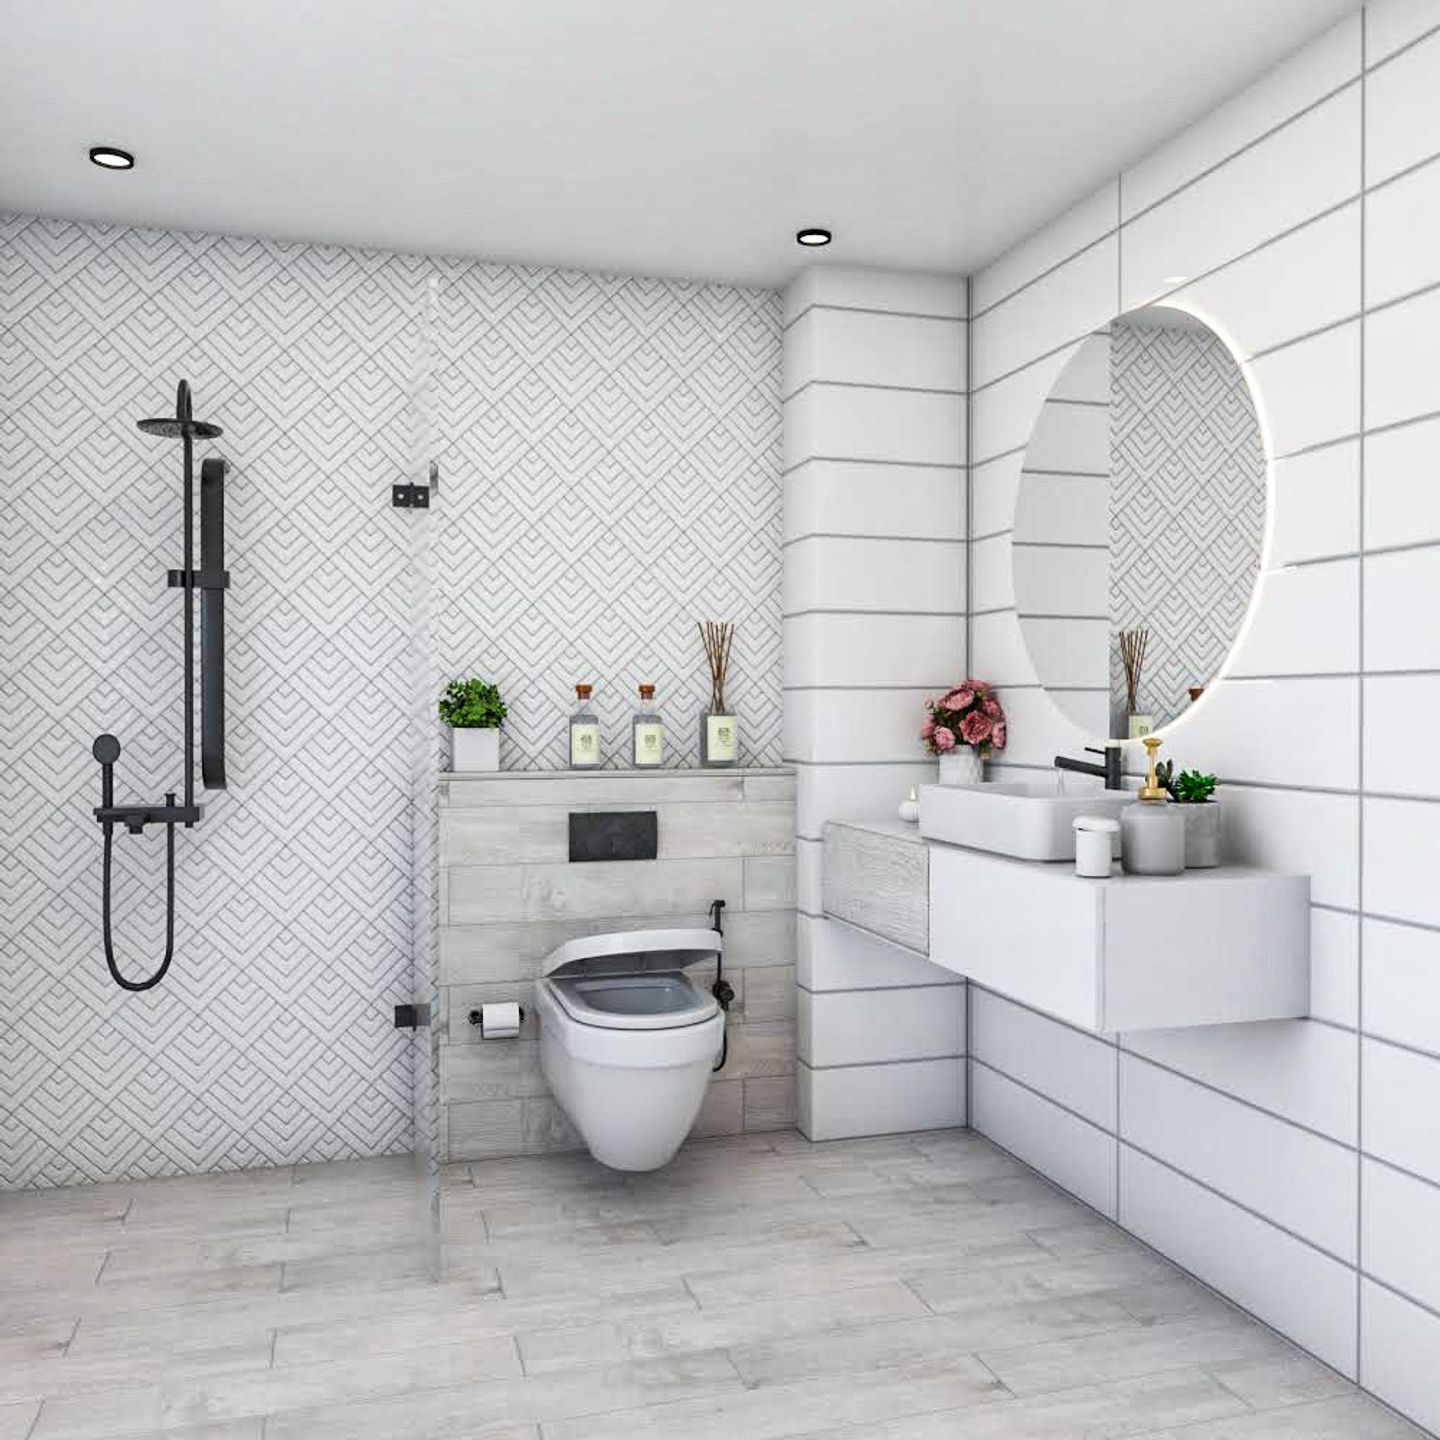 White And Grey Bathroom Design With Round Mirror - Livspace